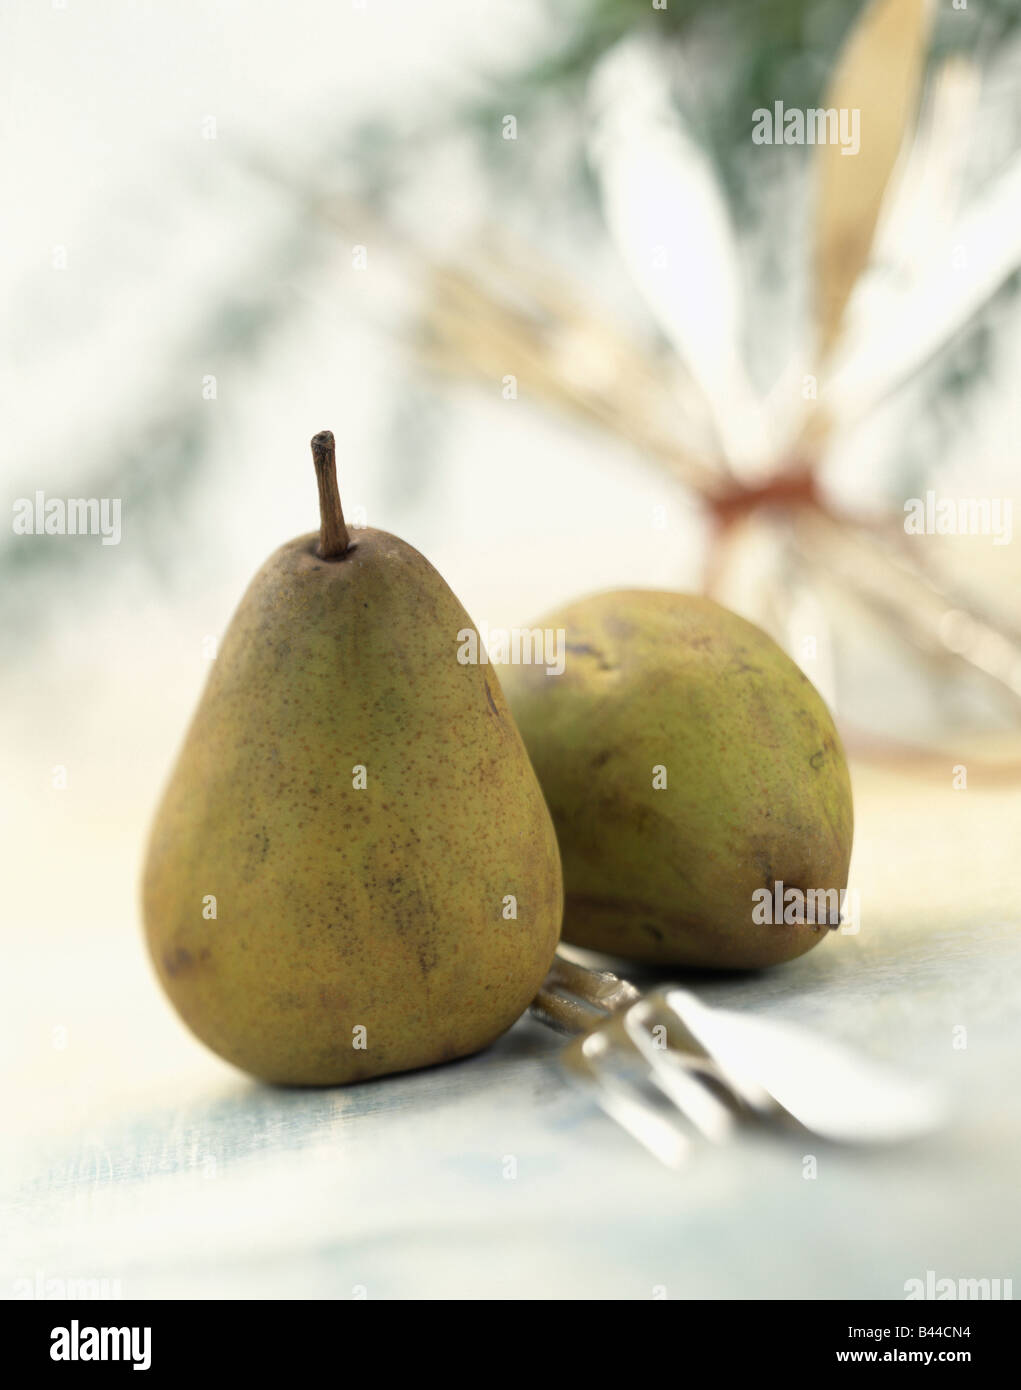 beurre hardy pears Stock Photo